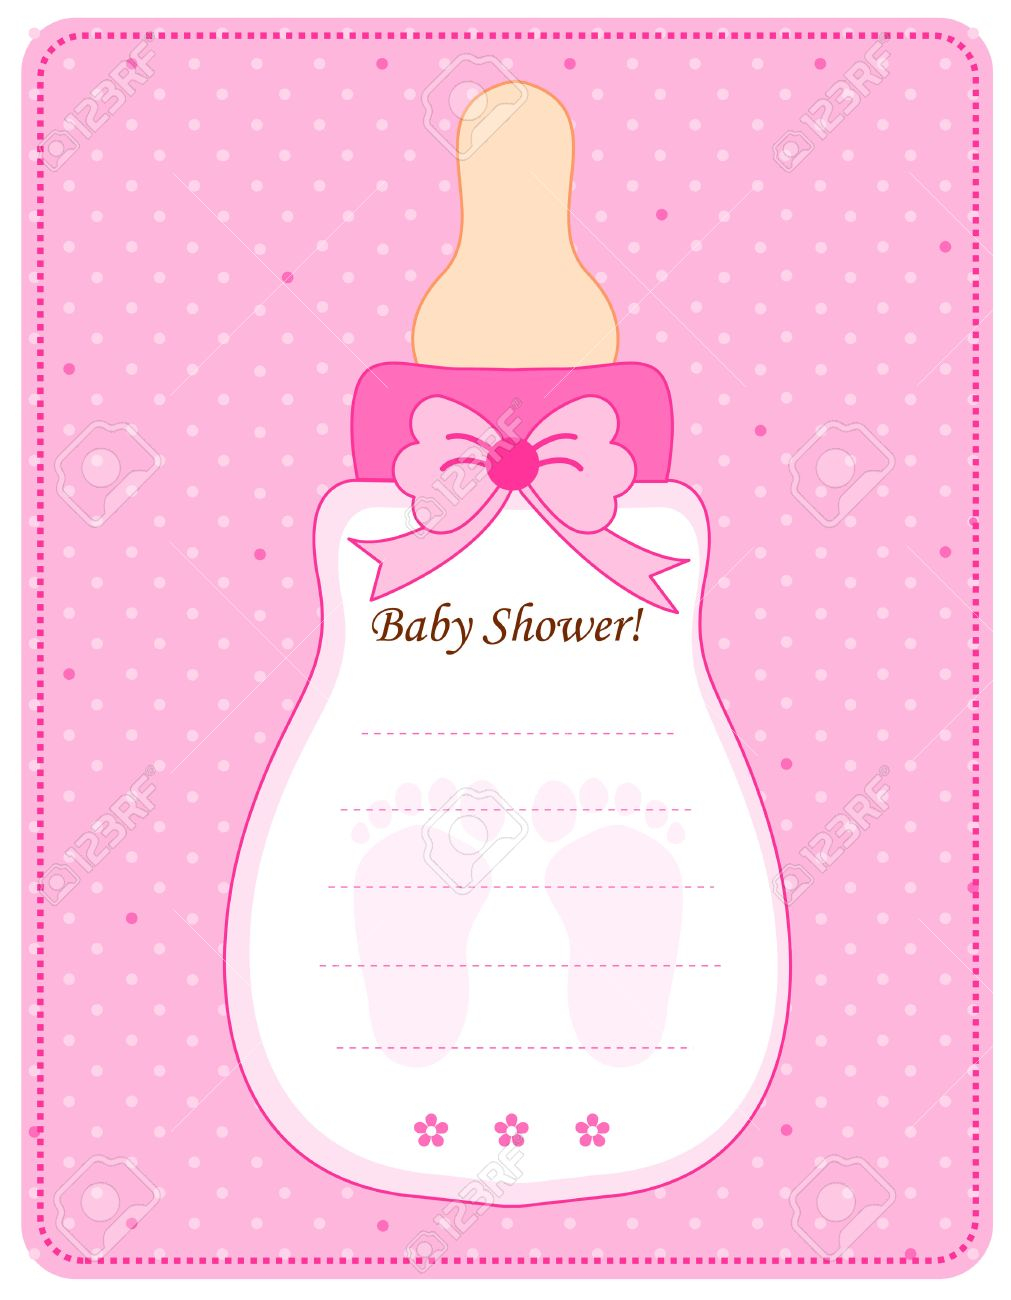 Cute feeding bottle shaped baby shower invitation card template. For Baby Shower Invitation Flyer Template